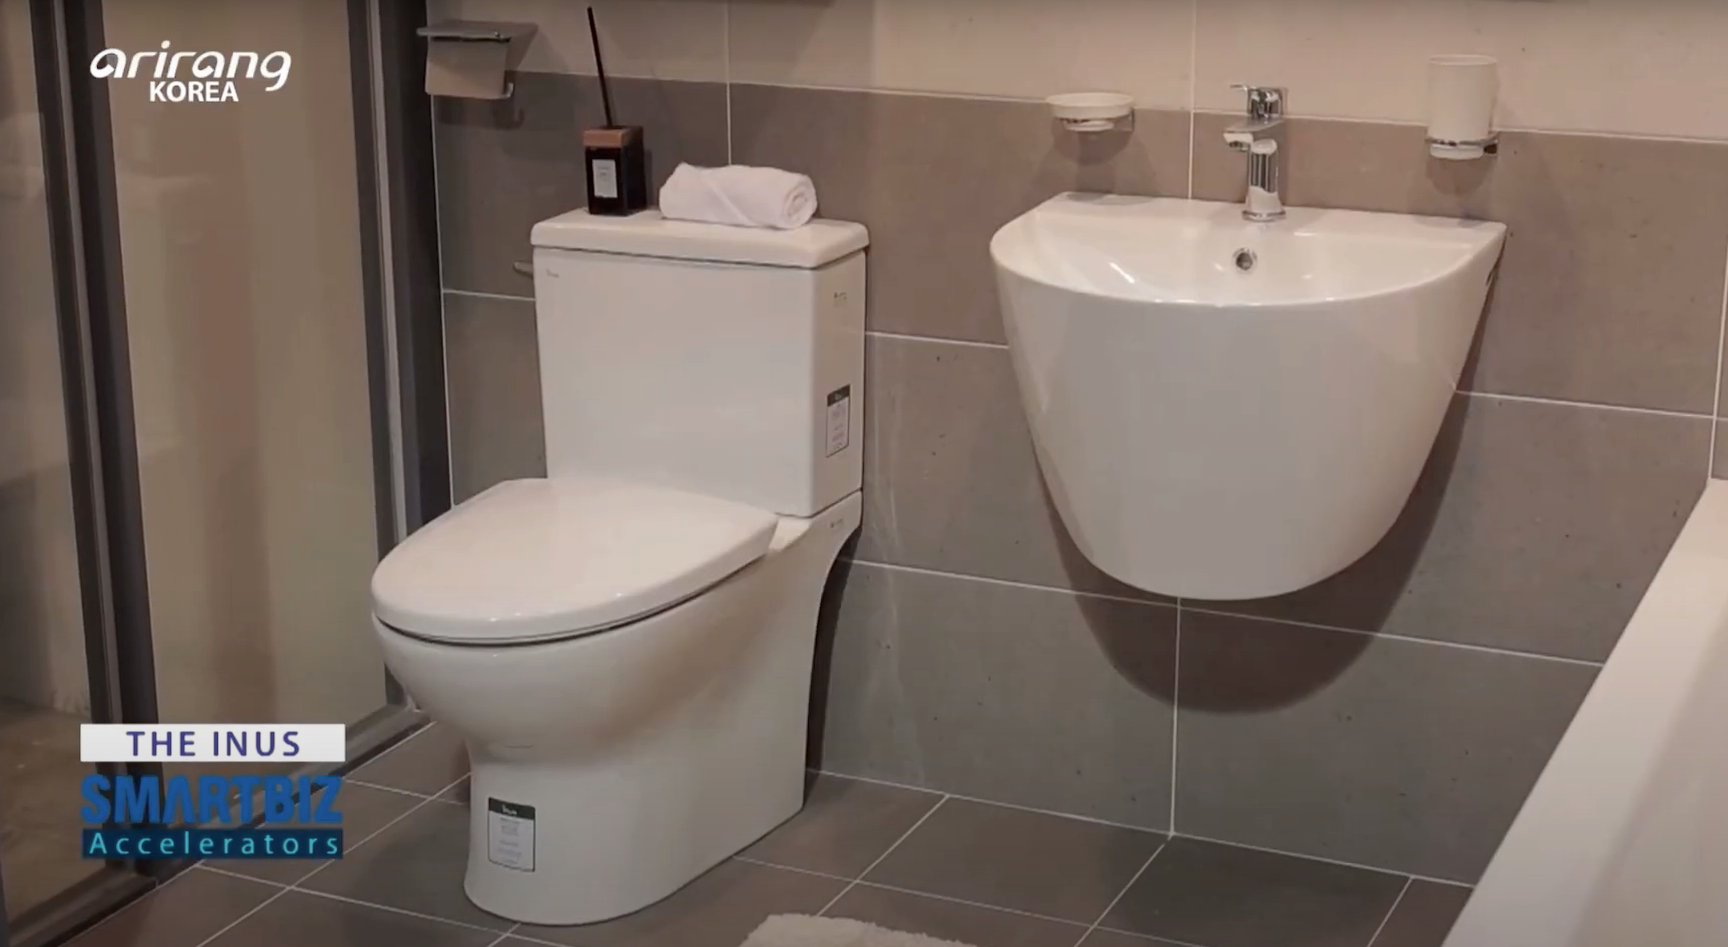 Load video: inus bidet no. 1 brand in korea luxury home bathroom appliance video